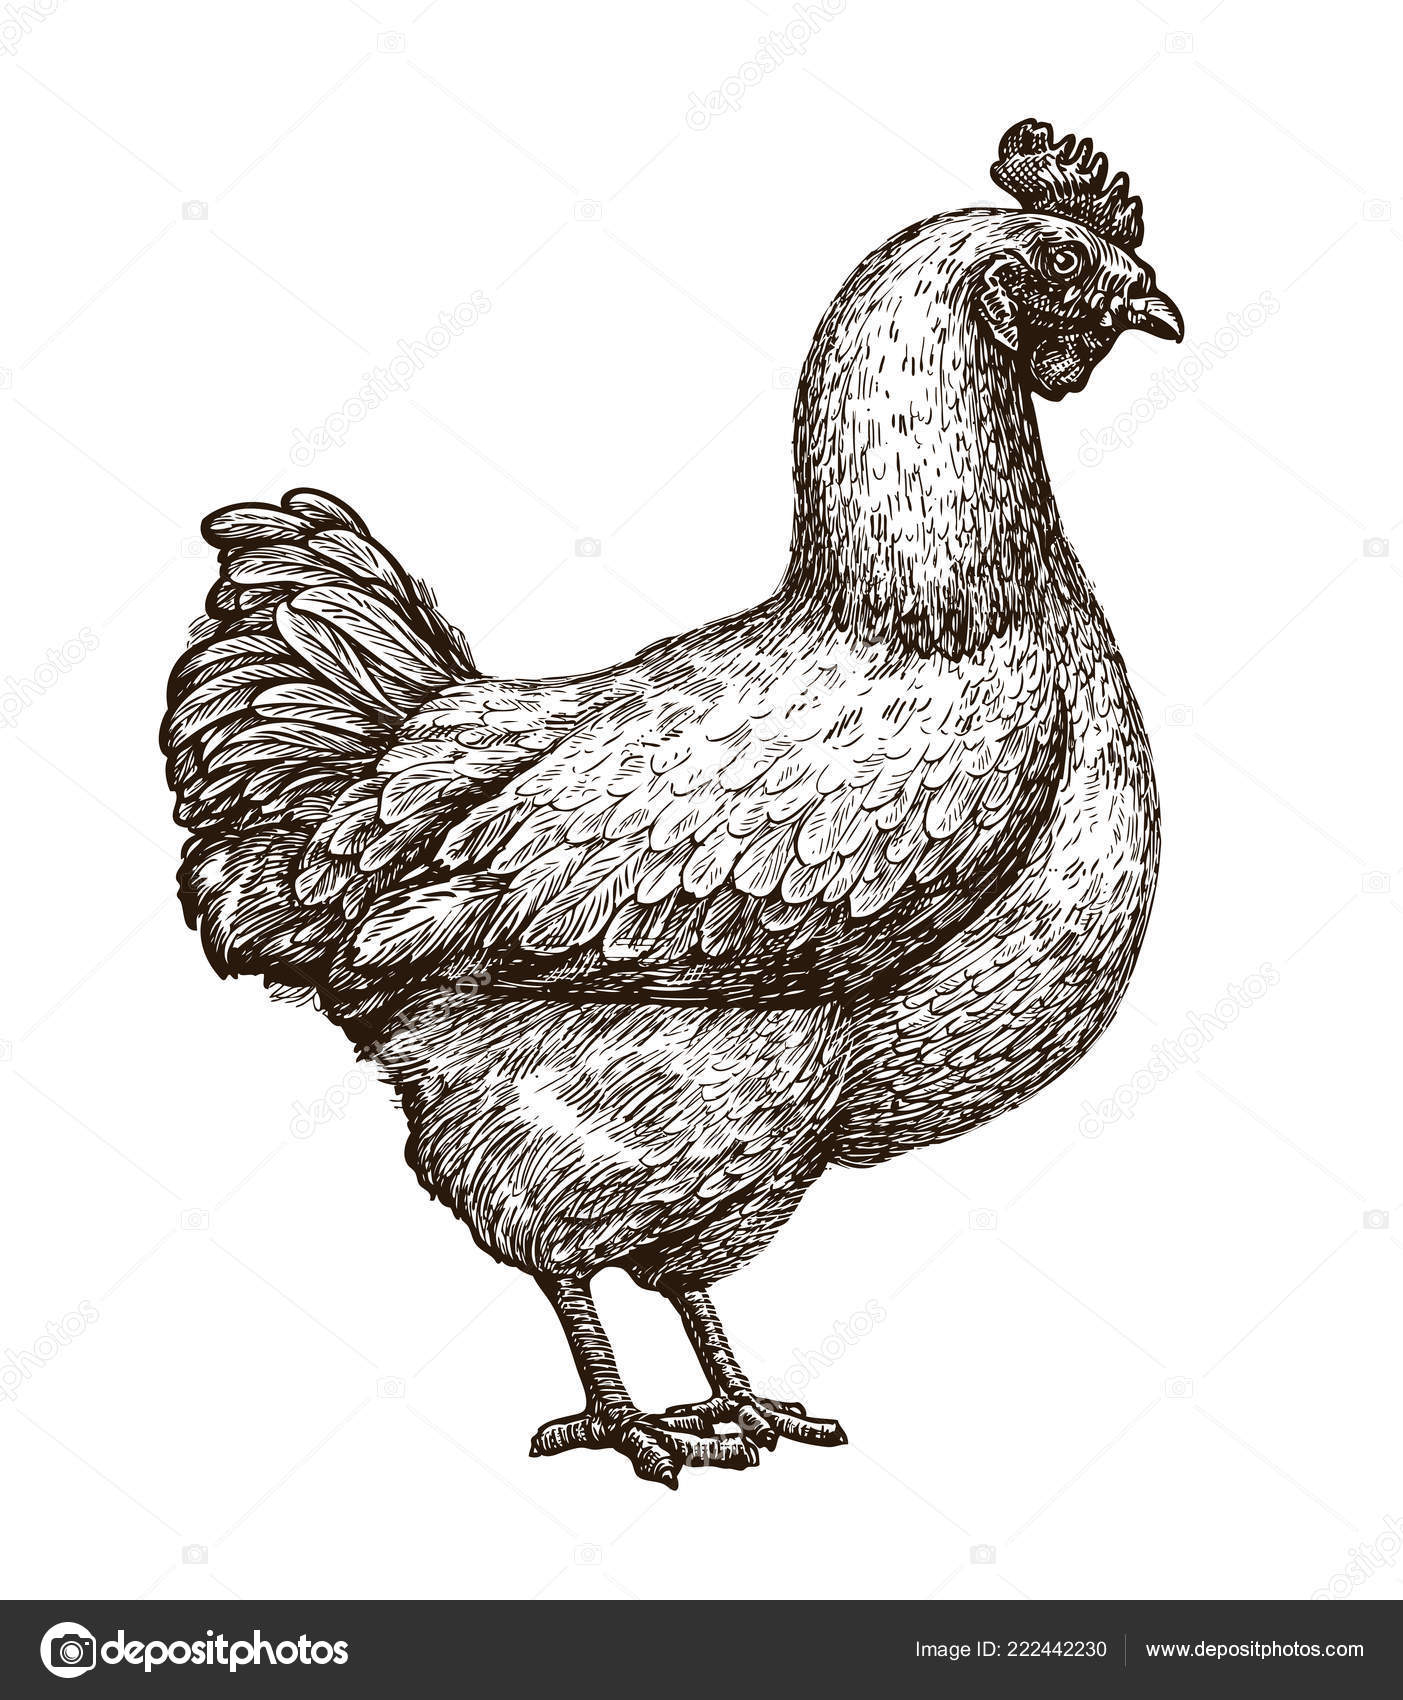 depositphotos 222442230 stock illustration hen chicken sketch poultry farm